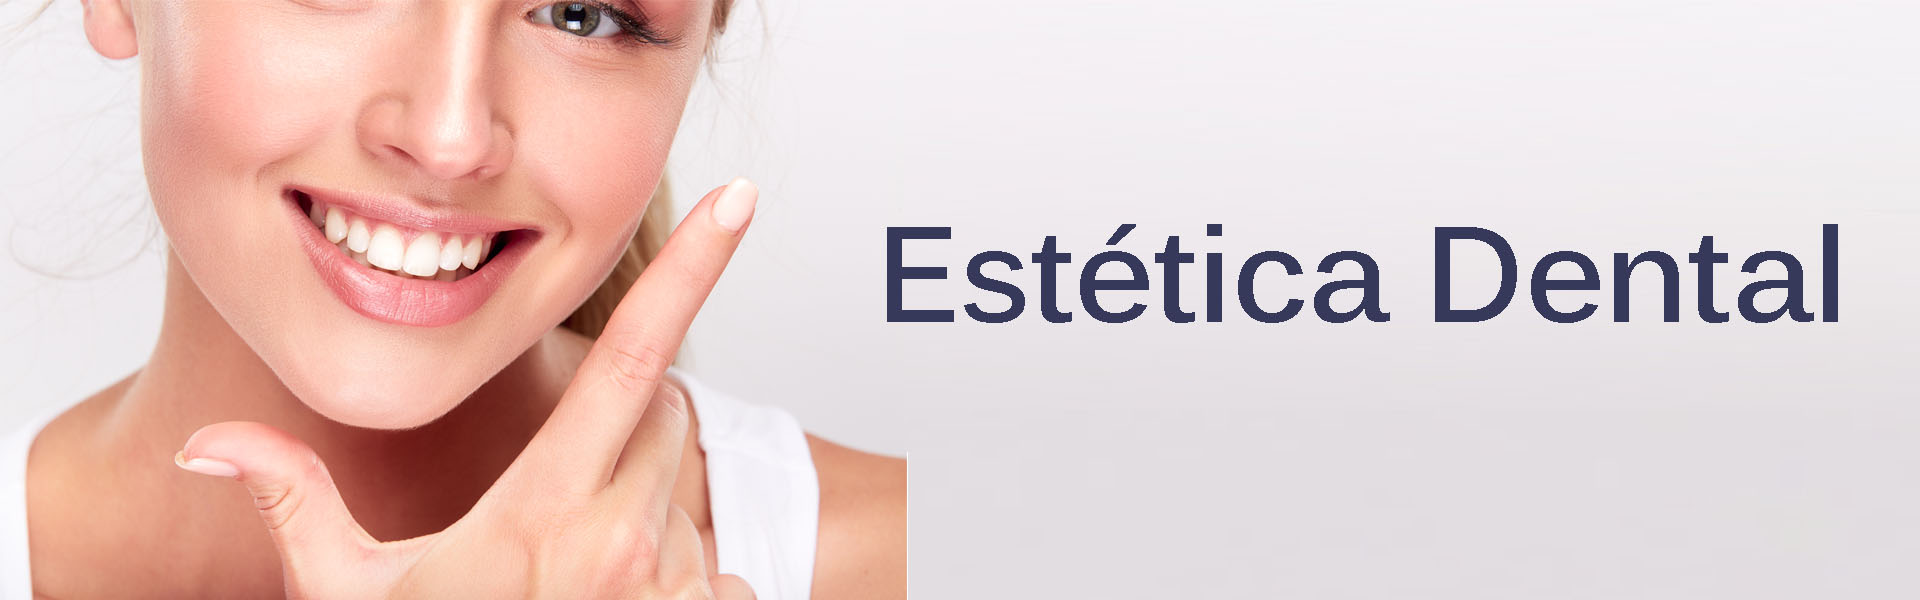 Estética Dental - Clínica dental en Sevilla